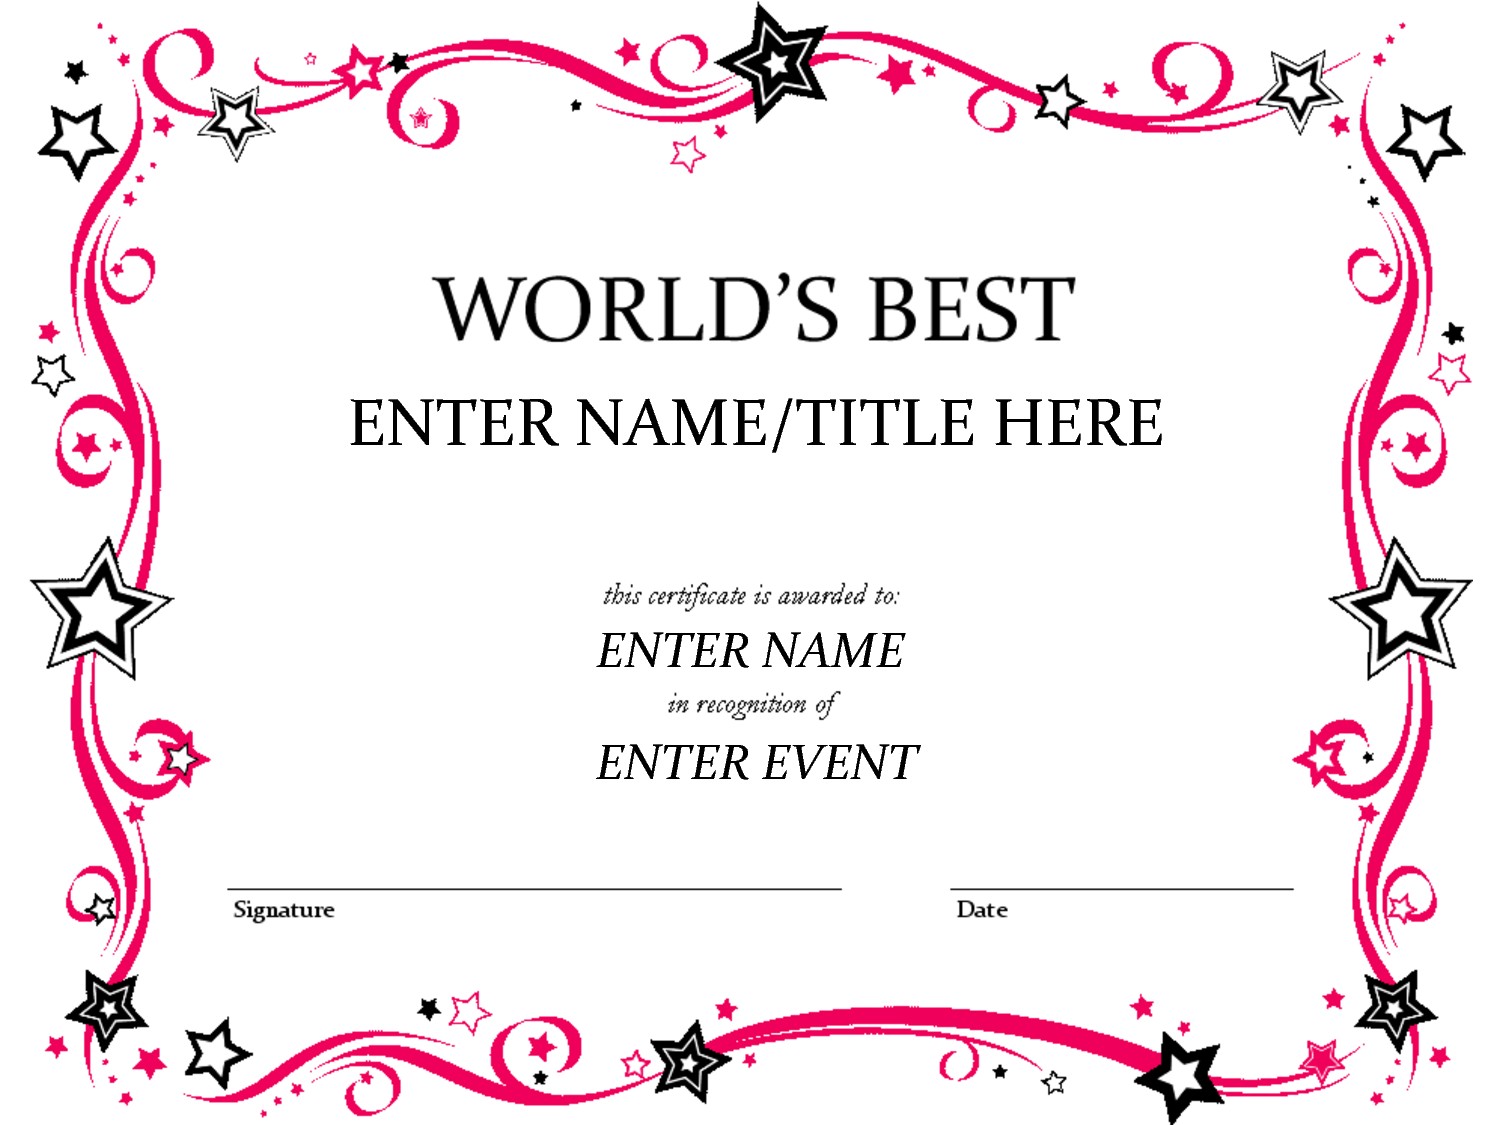 Award Certificate Template Shannon Early Pinte Cheerleading Wording